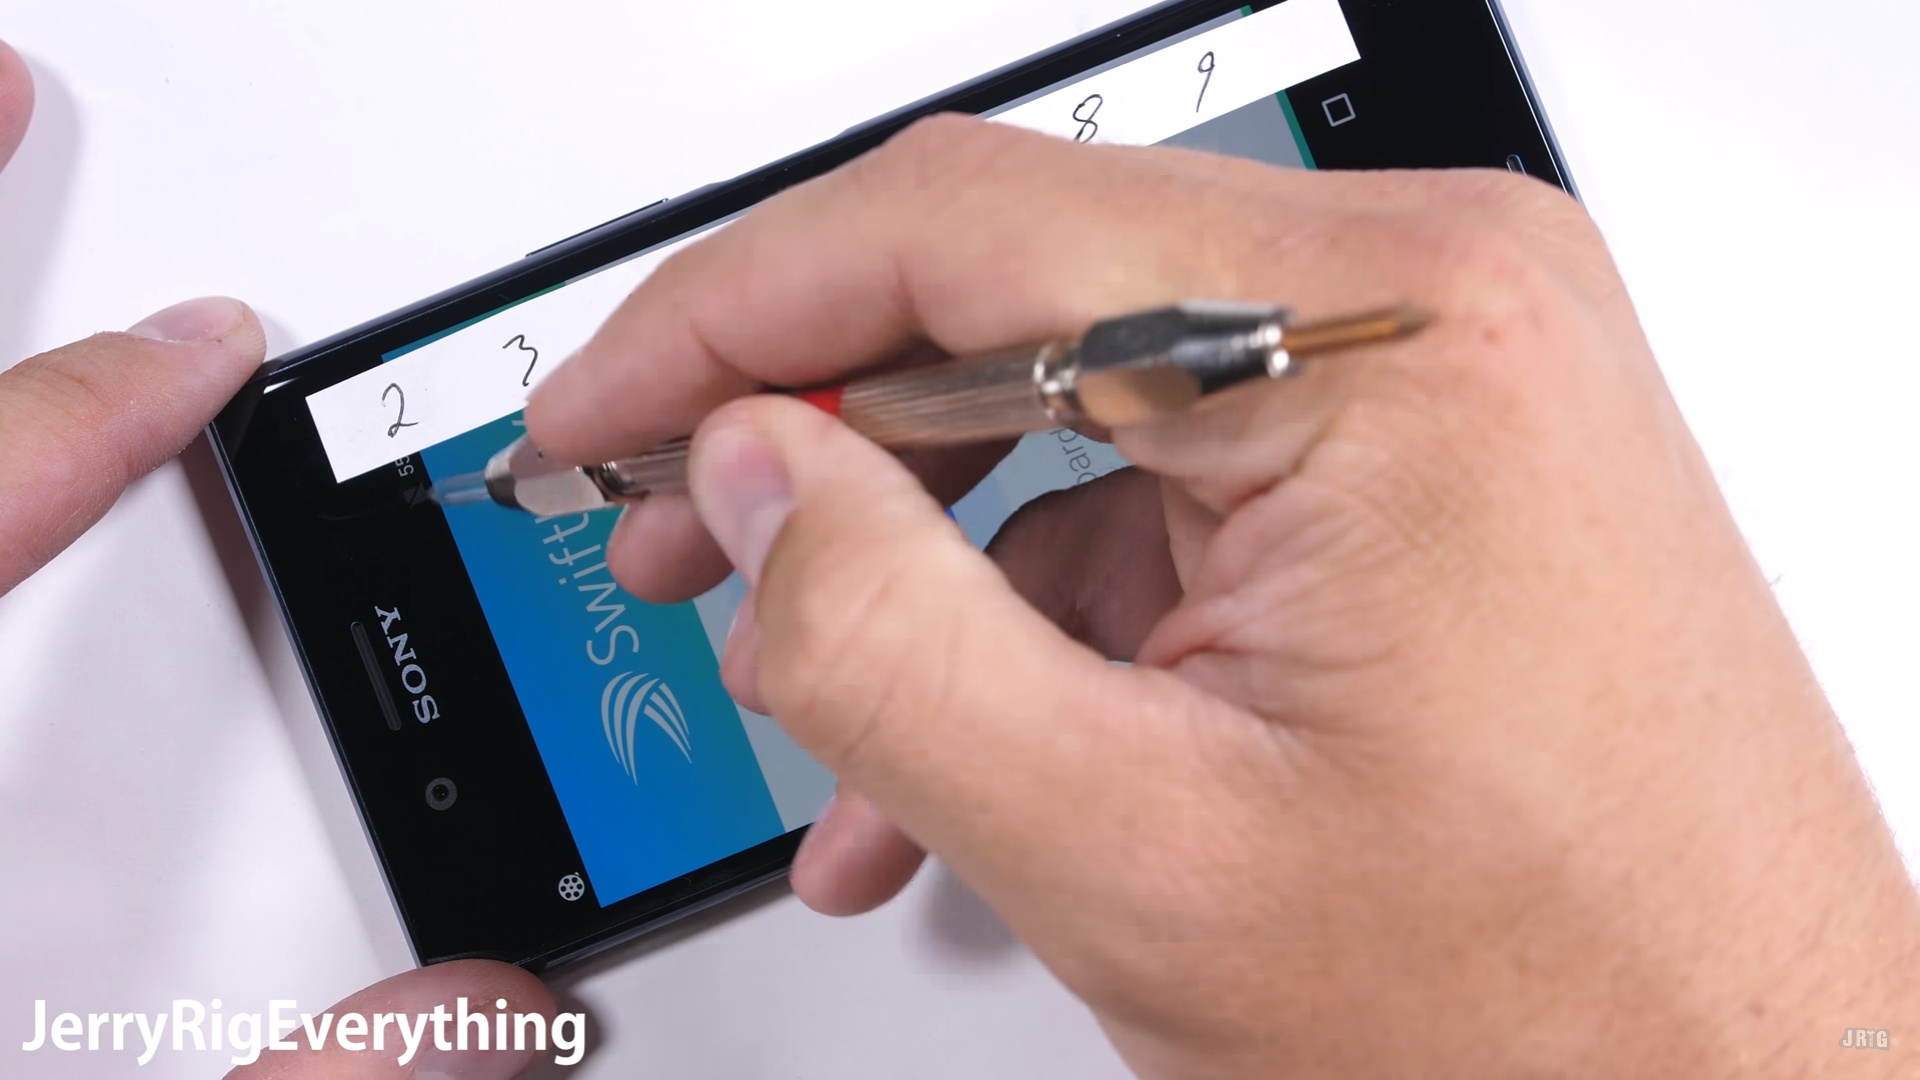 O smartphone Top de linha “Sony Xperia XZ Premium” passa por teste de durabilidade